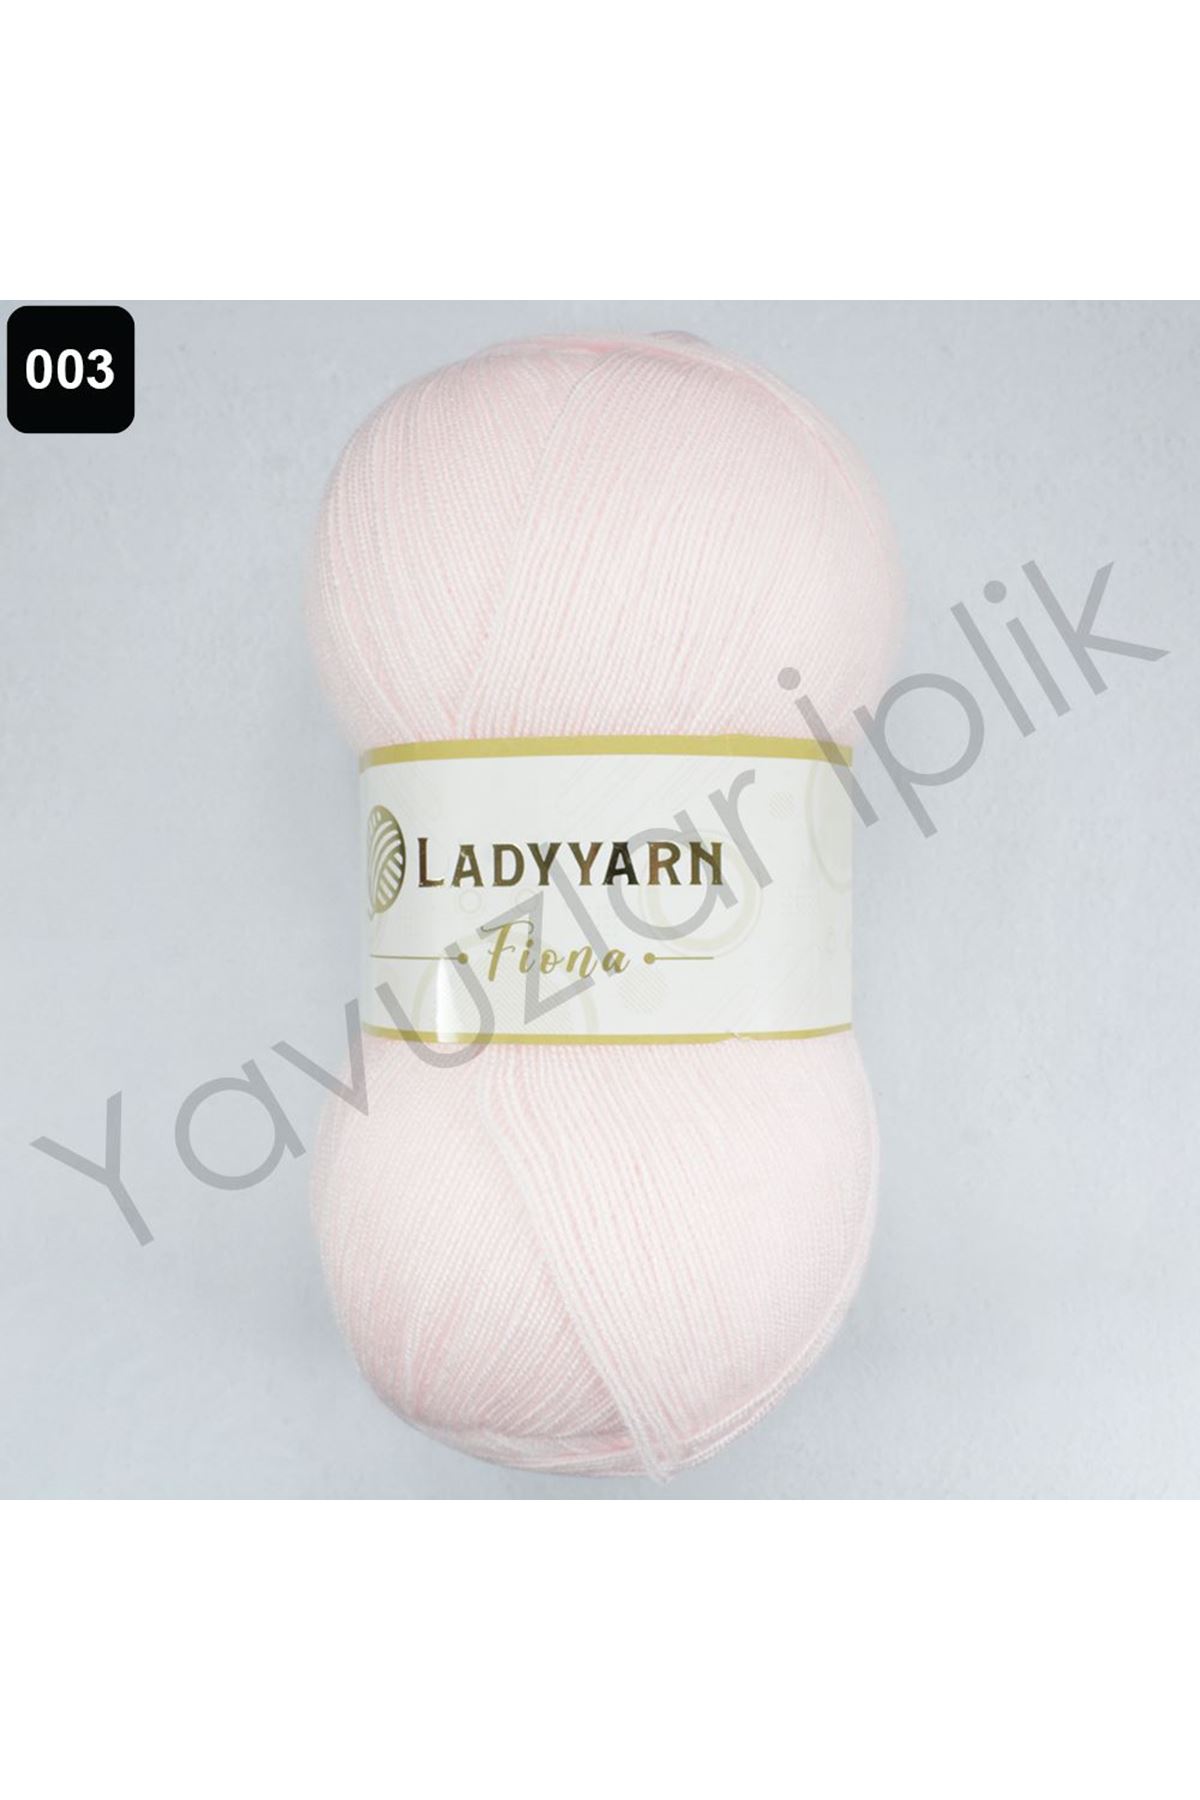 Lady Yarn Fiona Renk No: 003